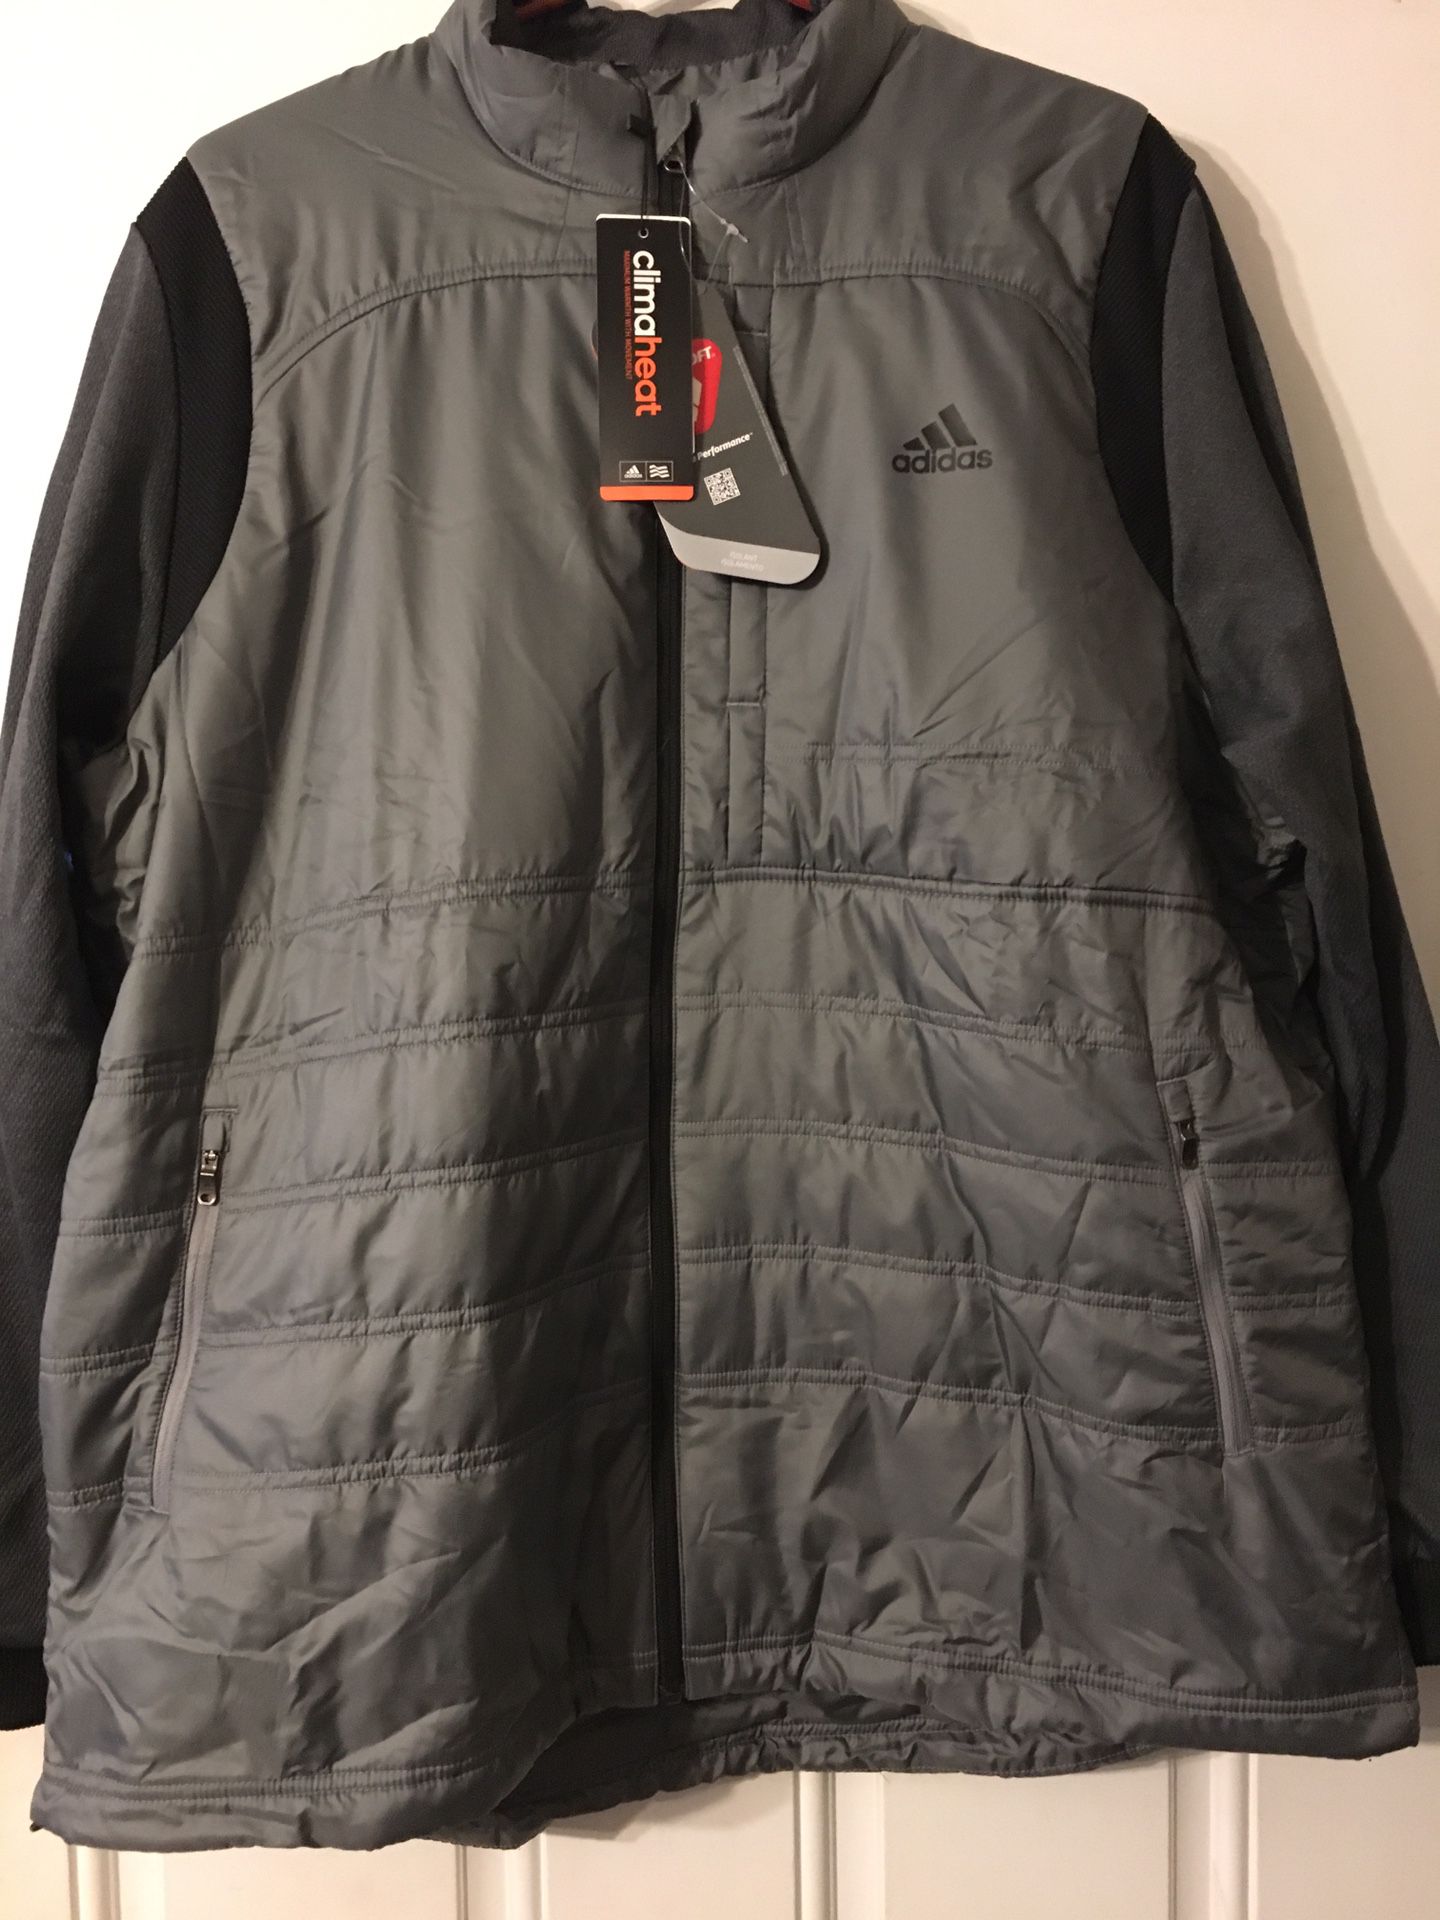 Men’s Adidas Climaheat Jacket - Brand New